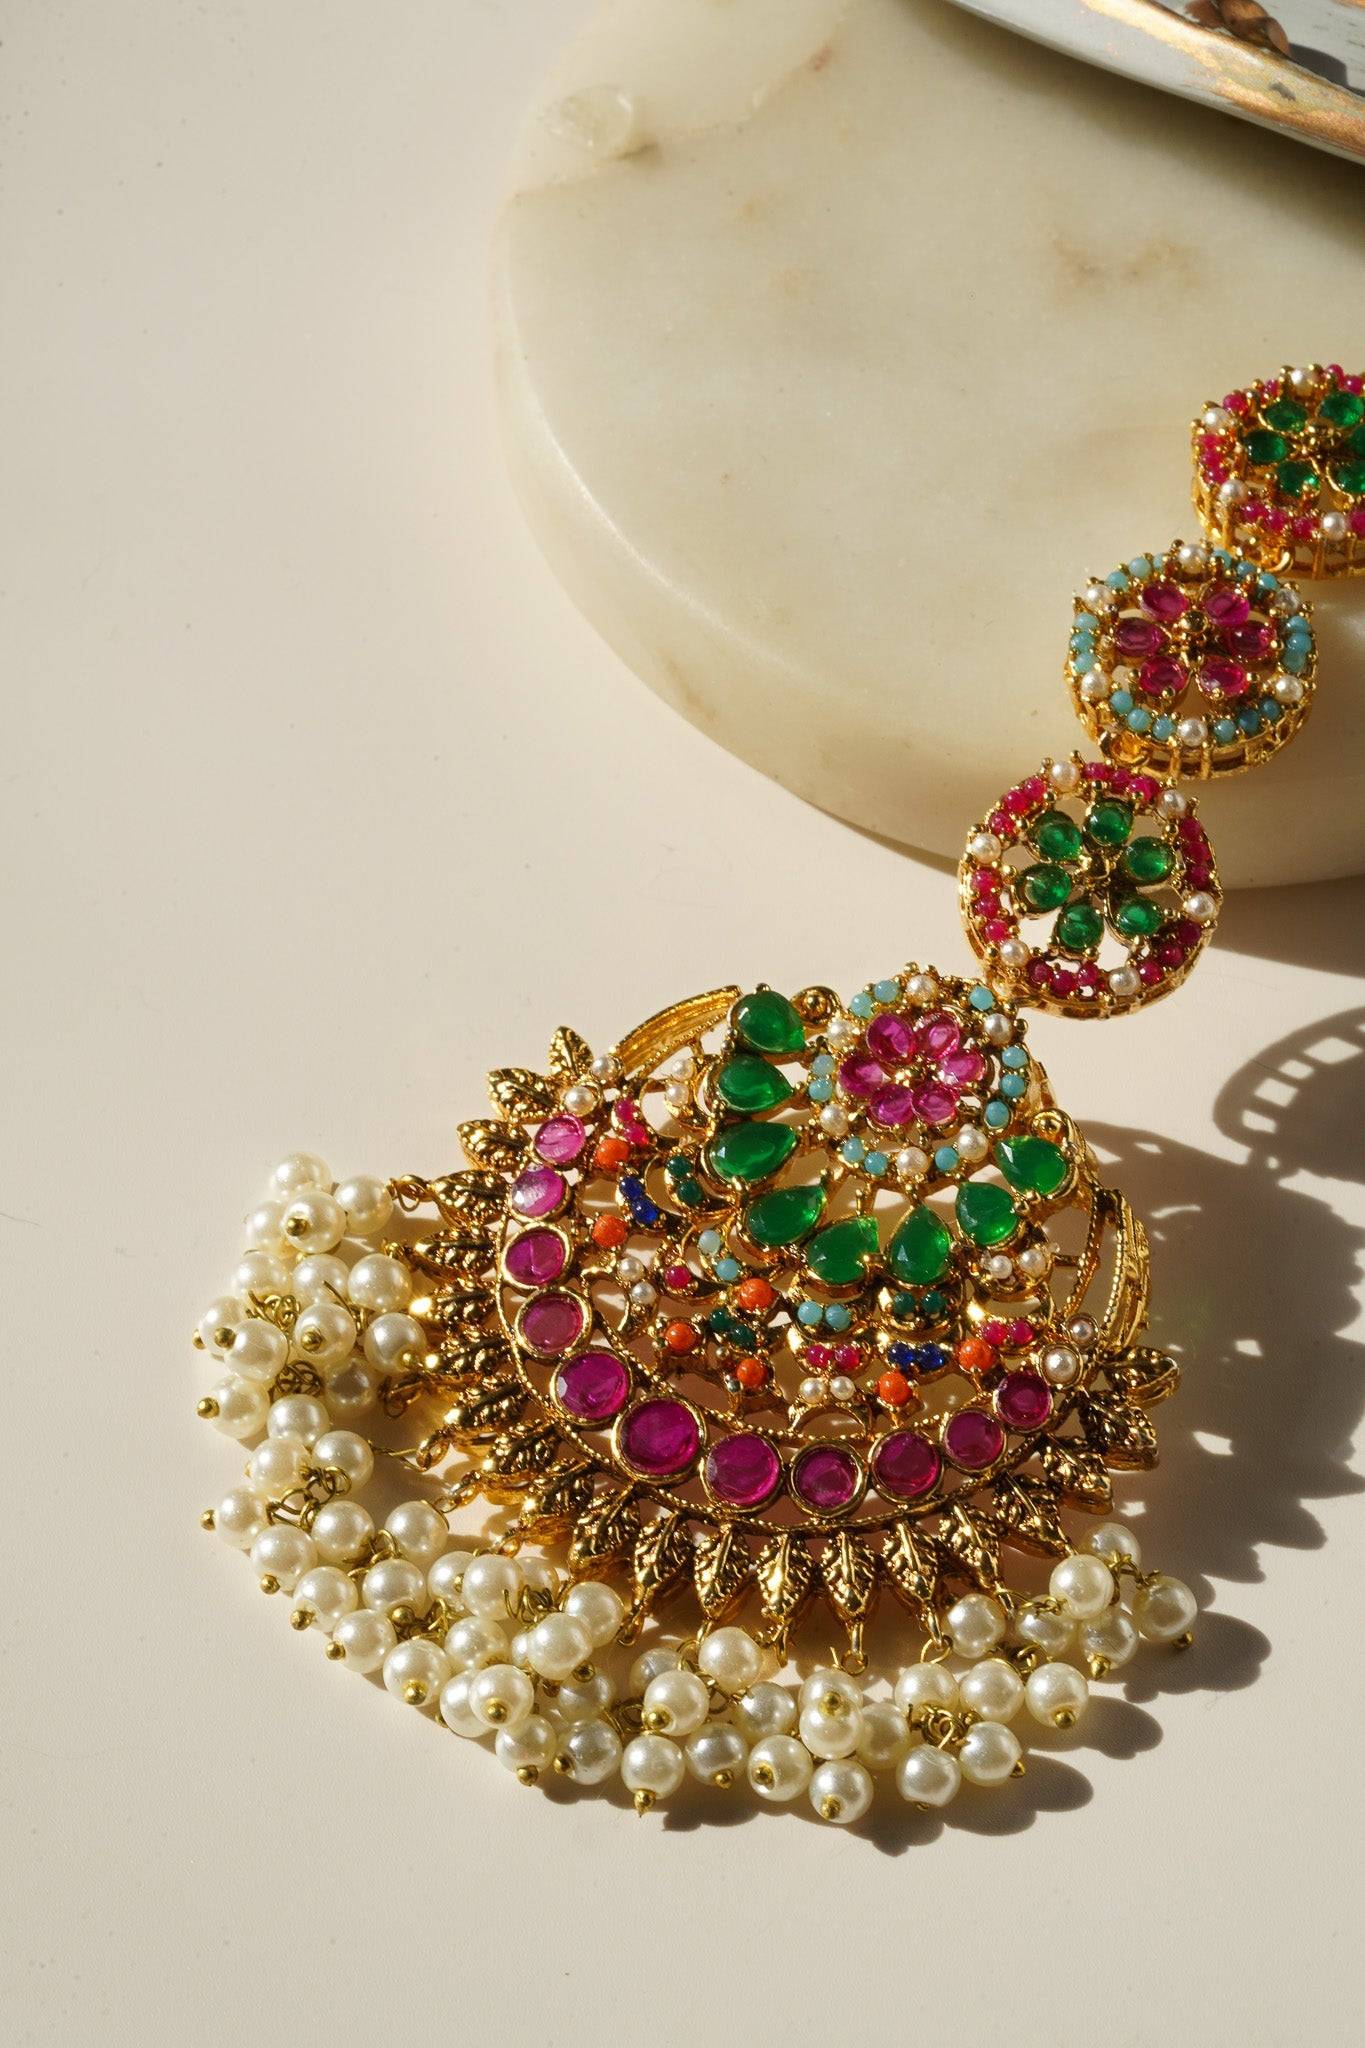 Chandbali Gold Earrings - Indian Jewelry Designs